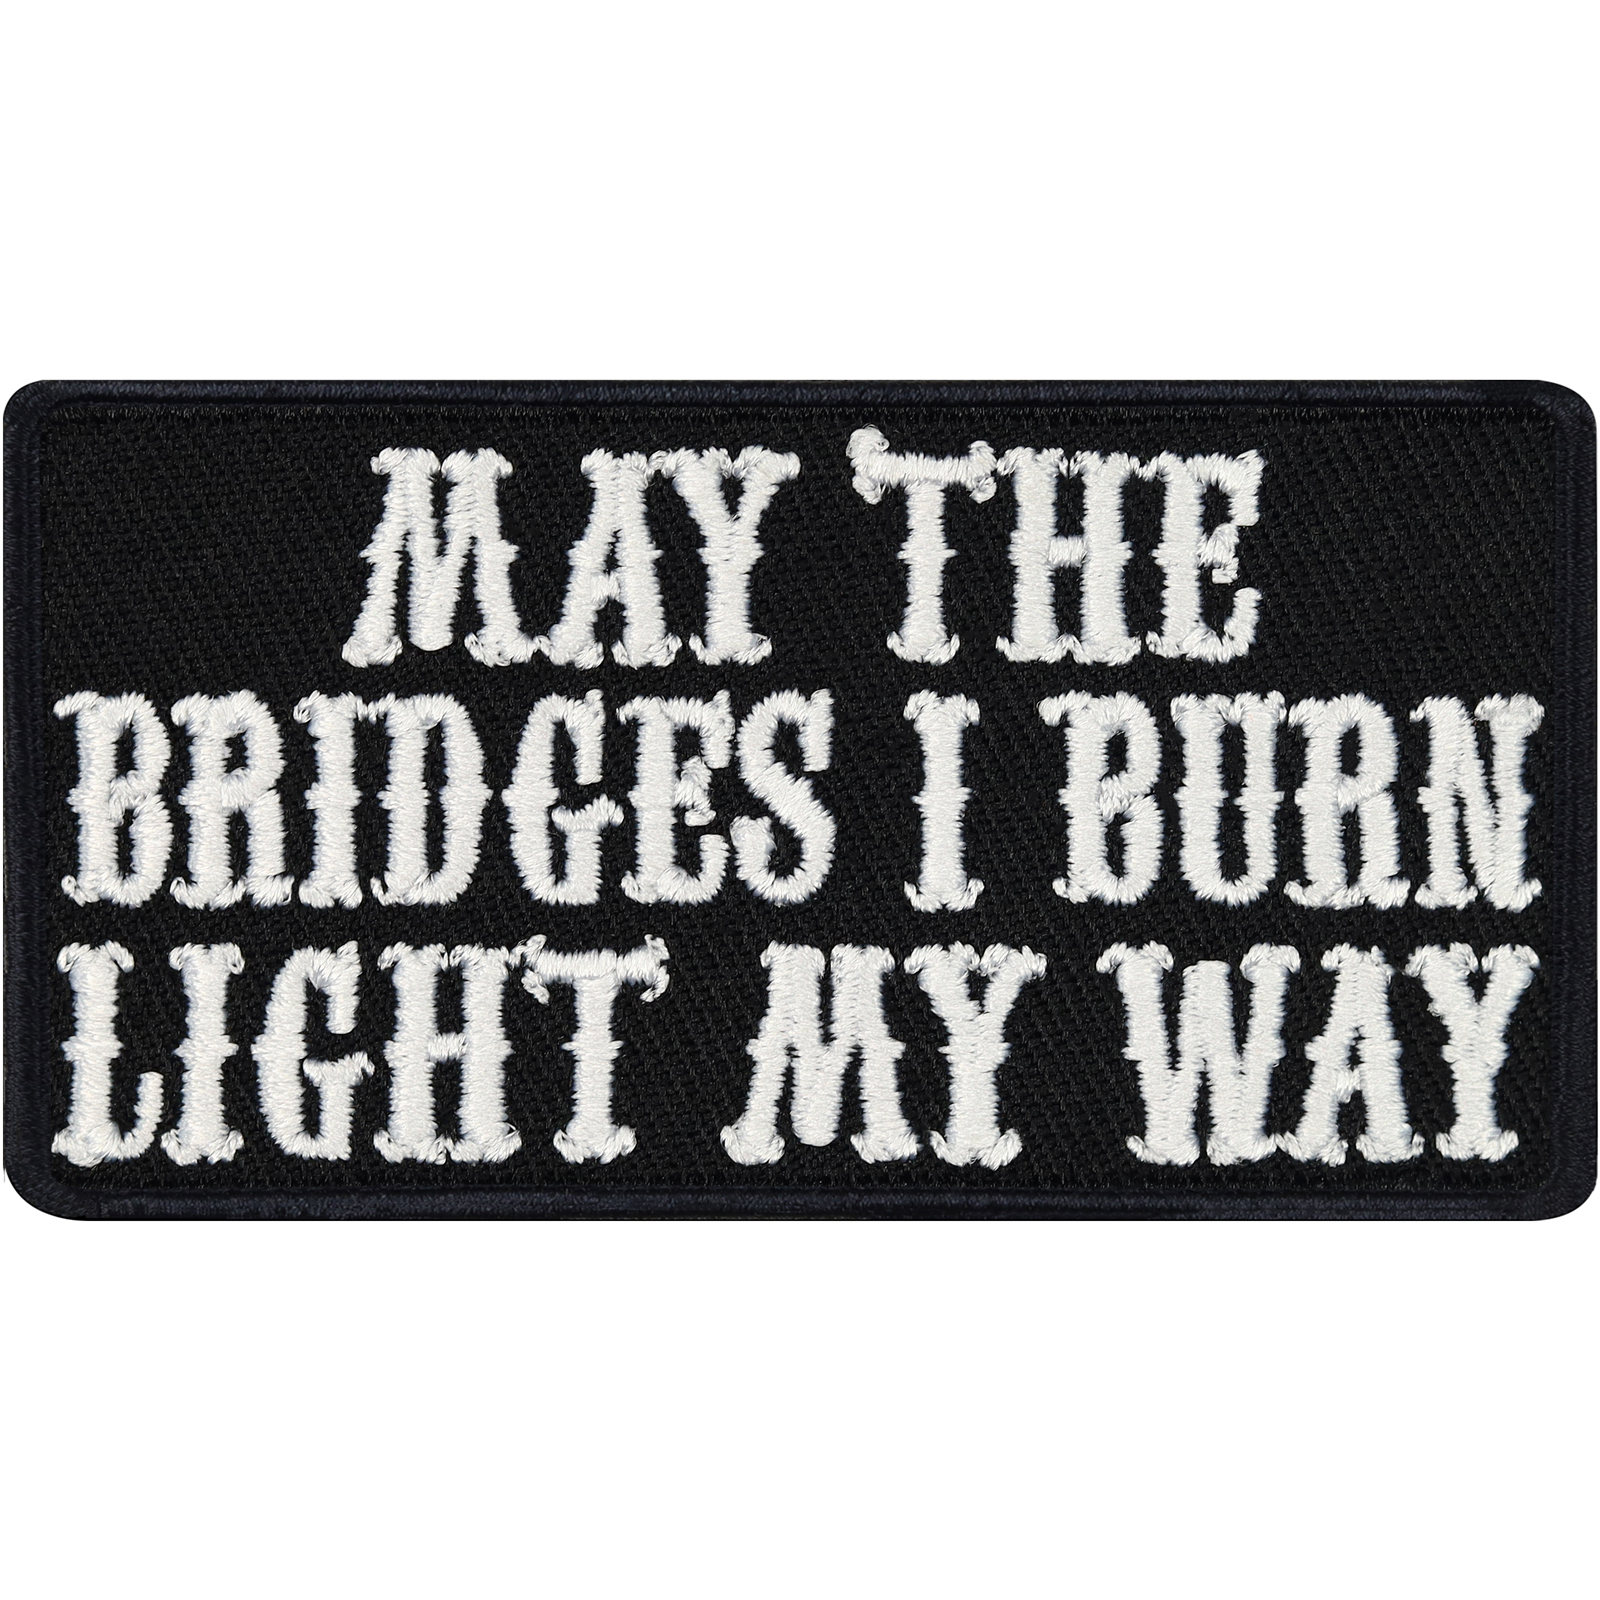 May the bridges I burn light my way - Patch